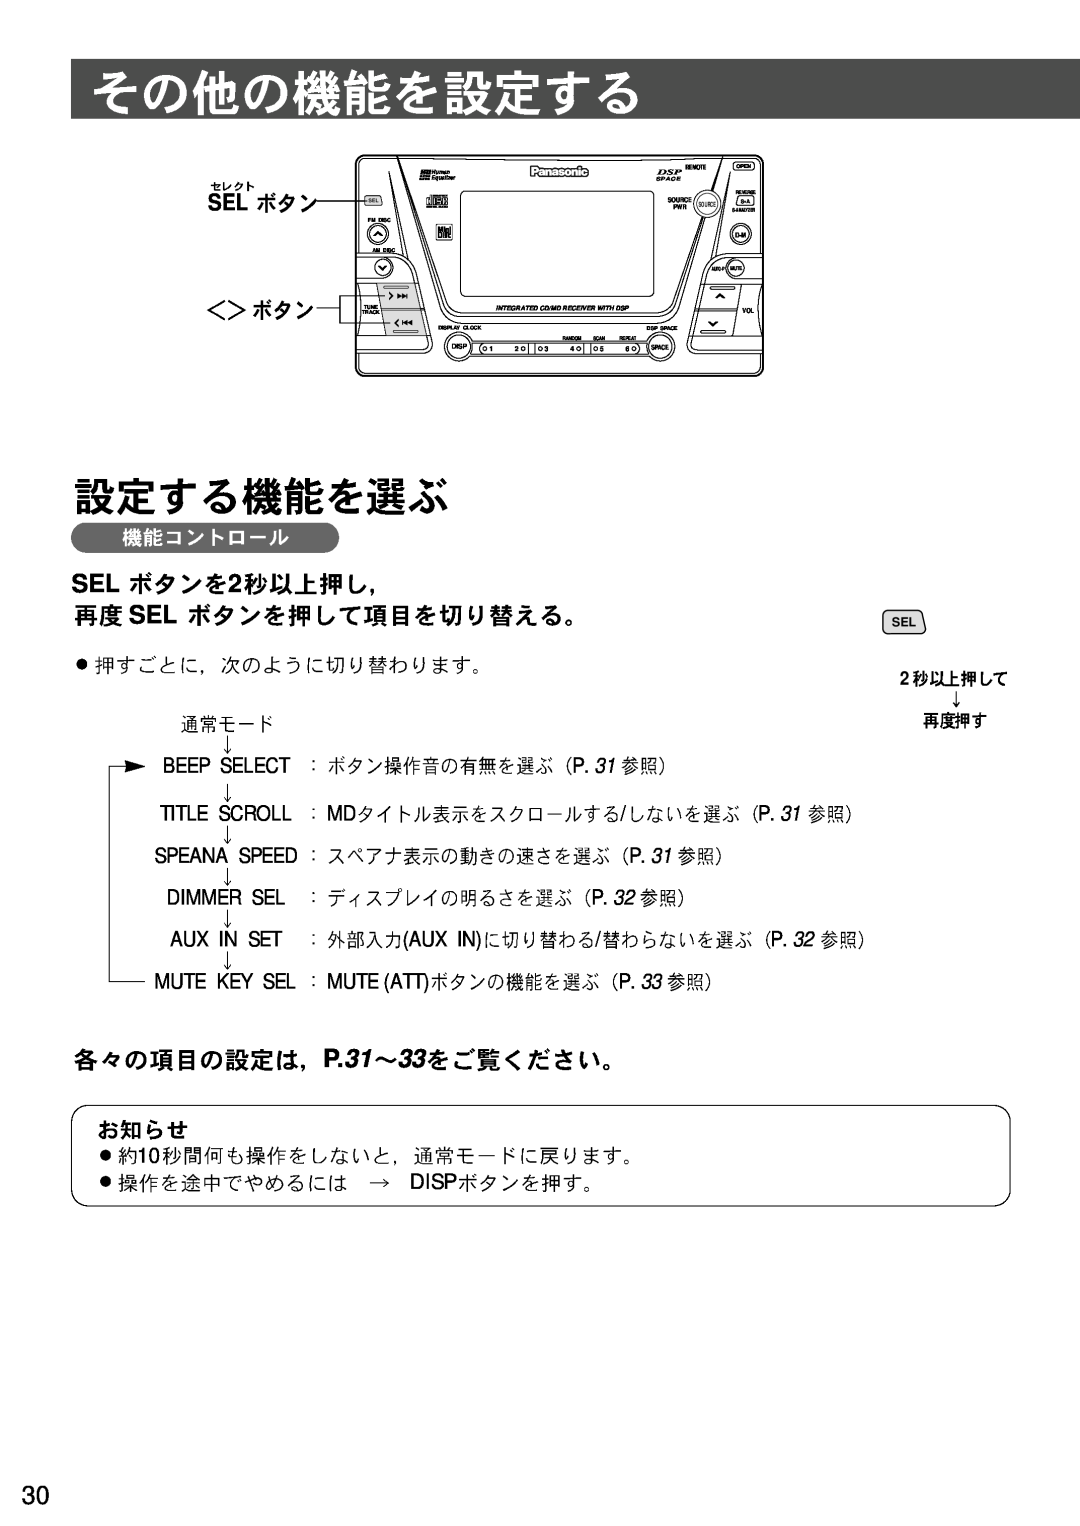 Panasonic CQ-VX3300D manual P.3133 